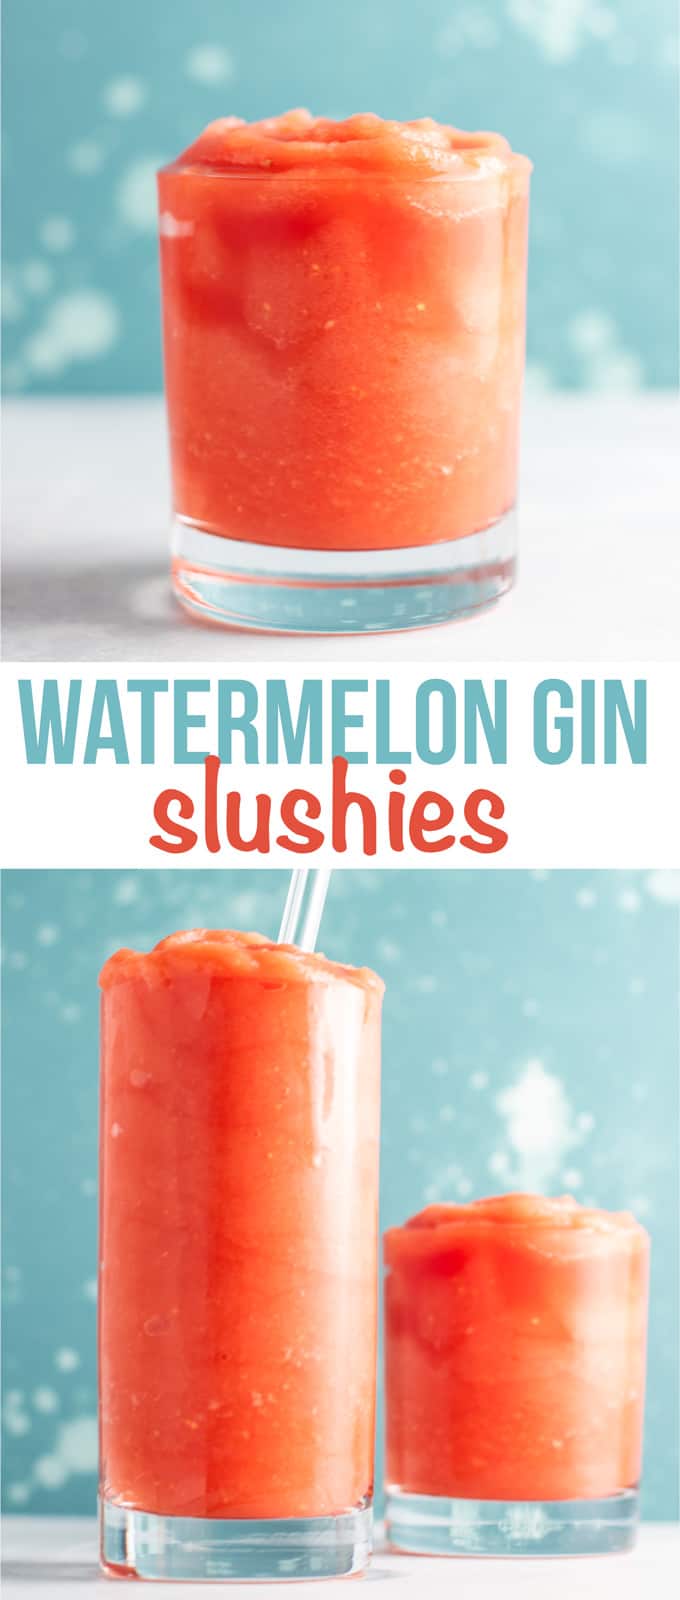 Watermelon gin slushies - the perfect way to cool off this summer! #watermeon #gin #slushies #drinks #healthy #watermelonslushie #vegan 